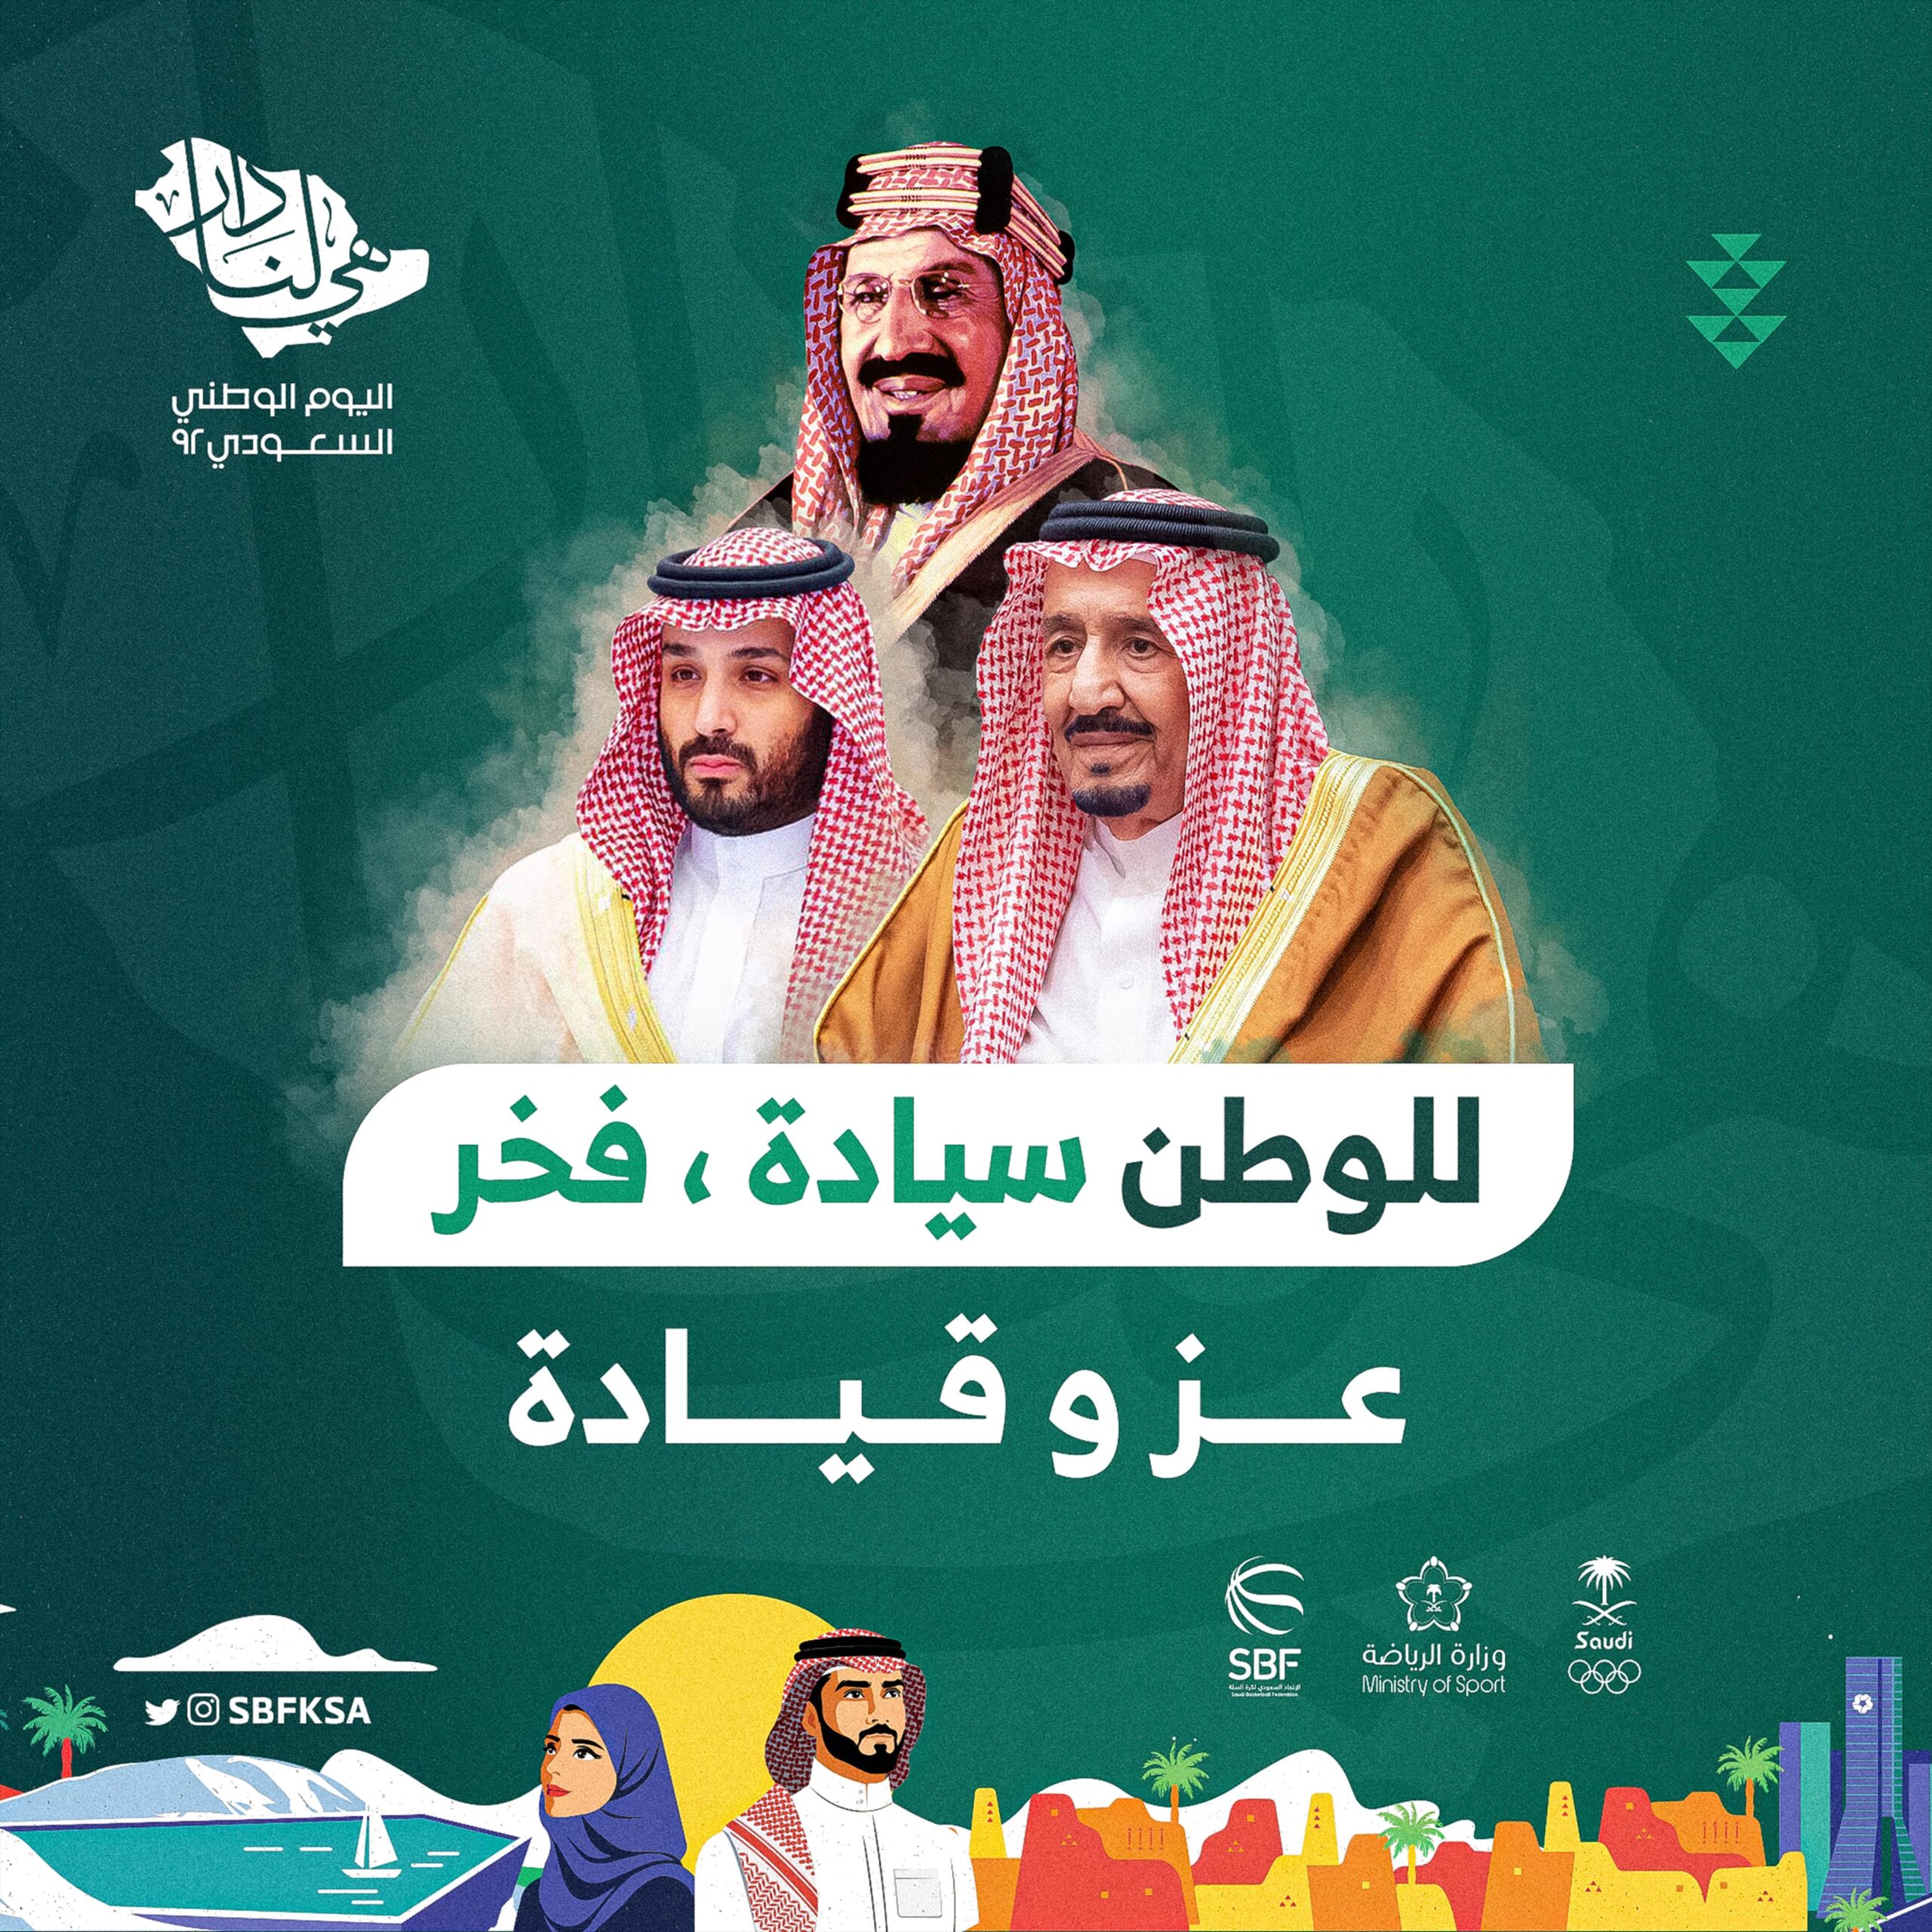 You are currently viewing الاتحاد يهنئ الملك وولي العهد والشعب السعودي بمناسبة اليوم الوطني 92